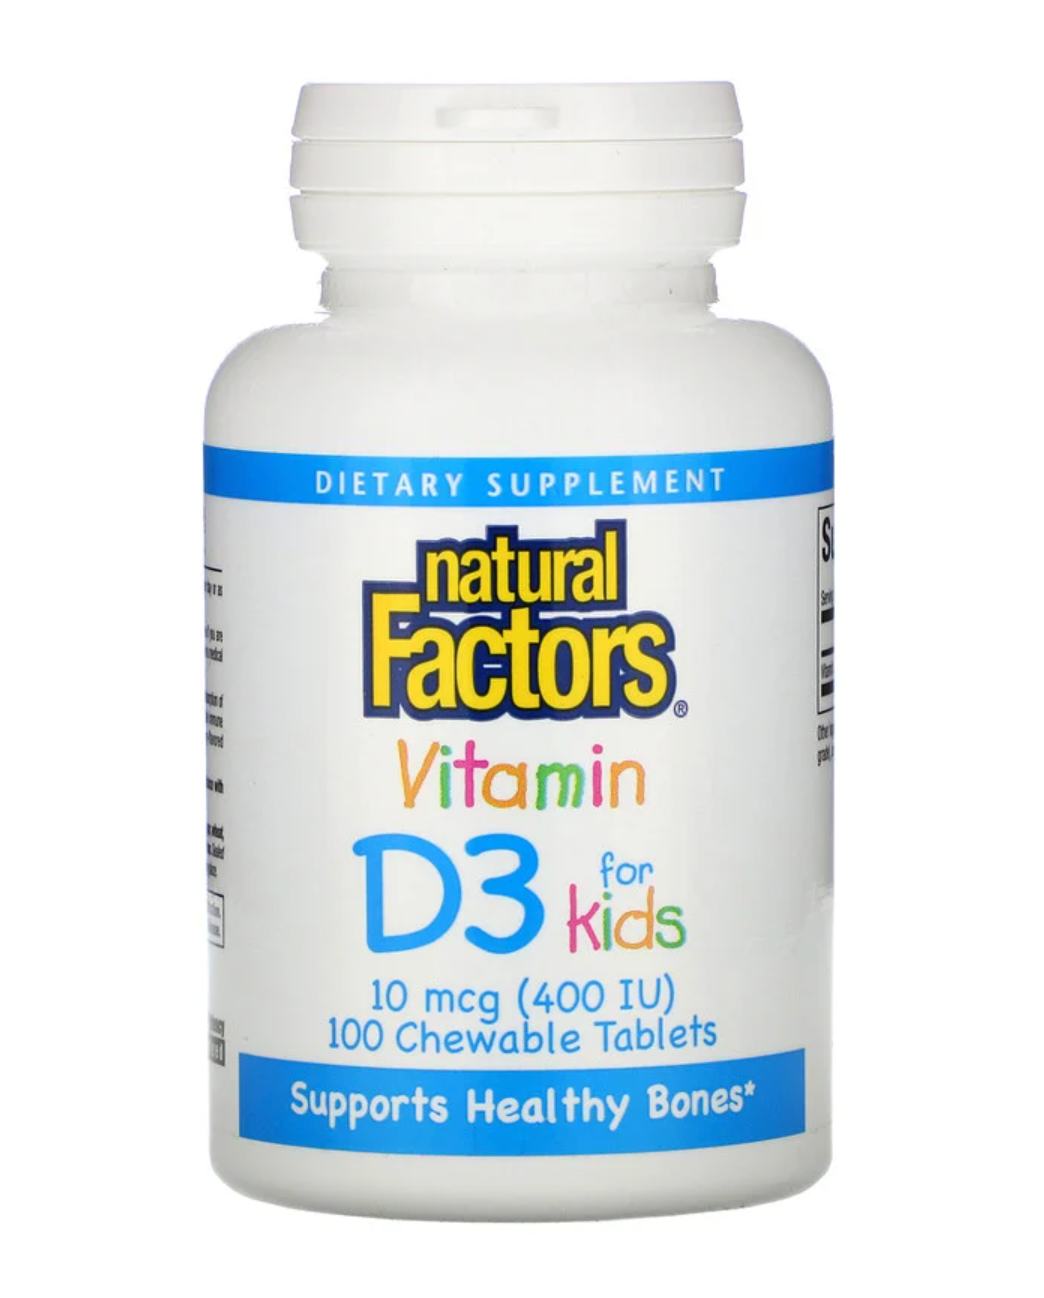 Vitamin D3 for kids 400 IU (10 mcg)